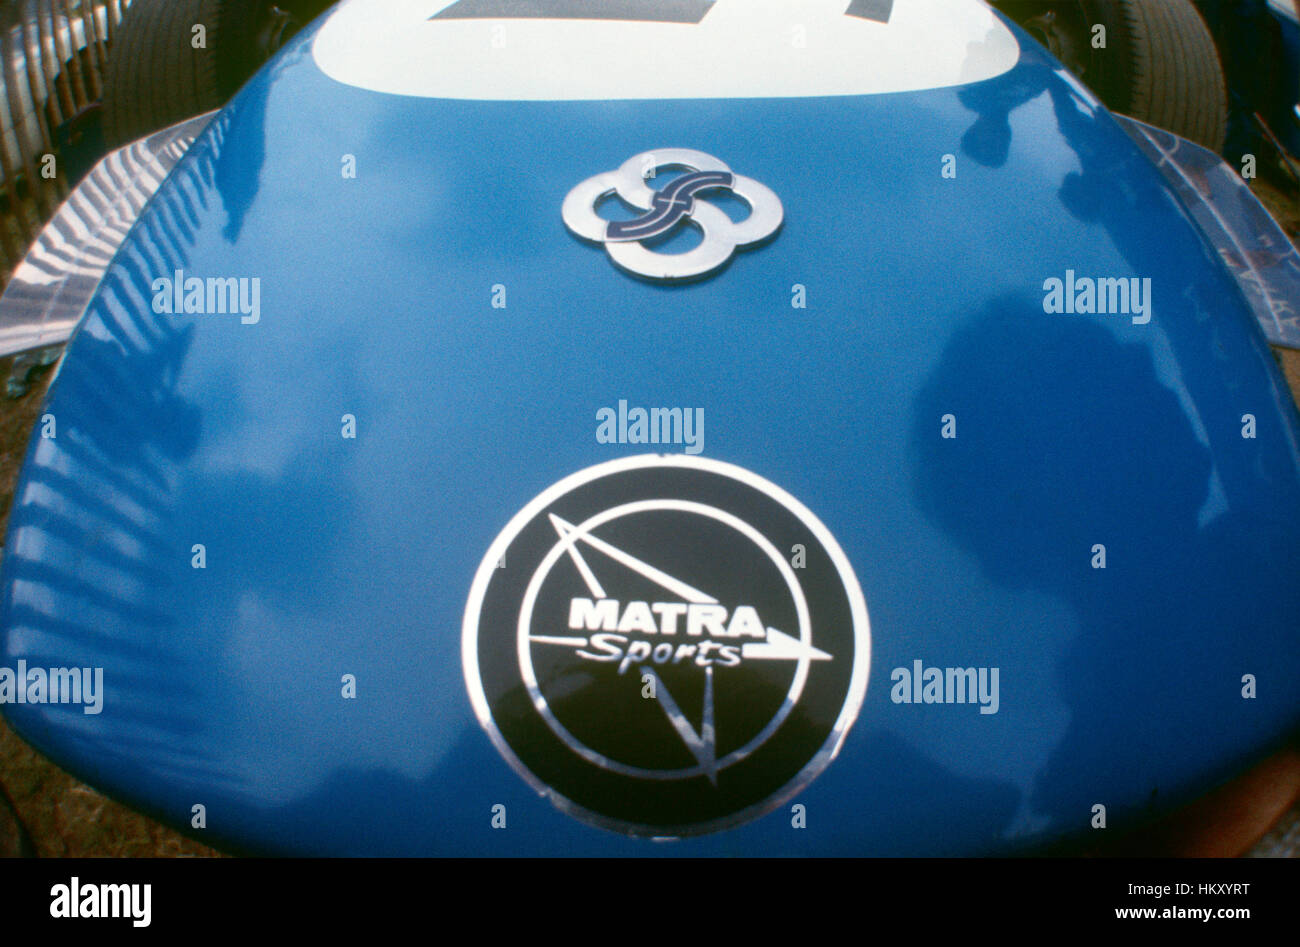 Matra F1 Nose Logo Stock Photo